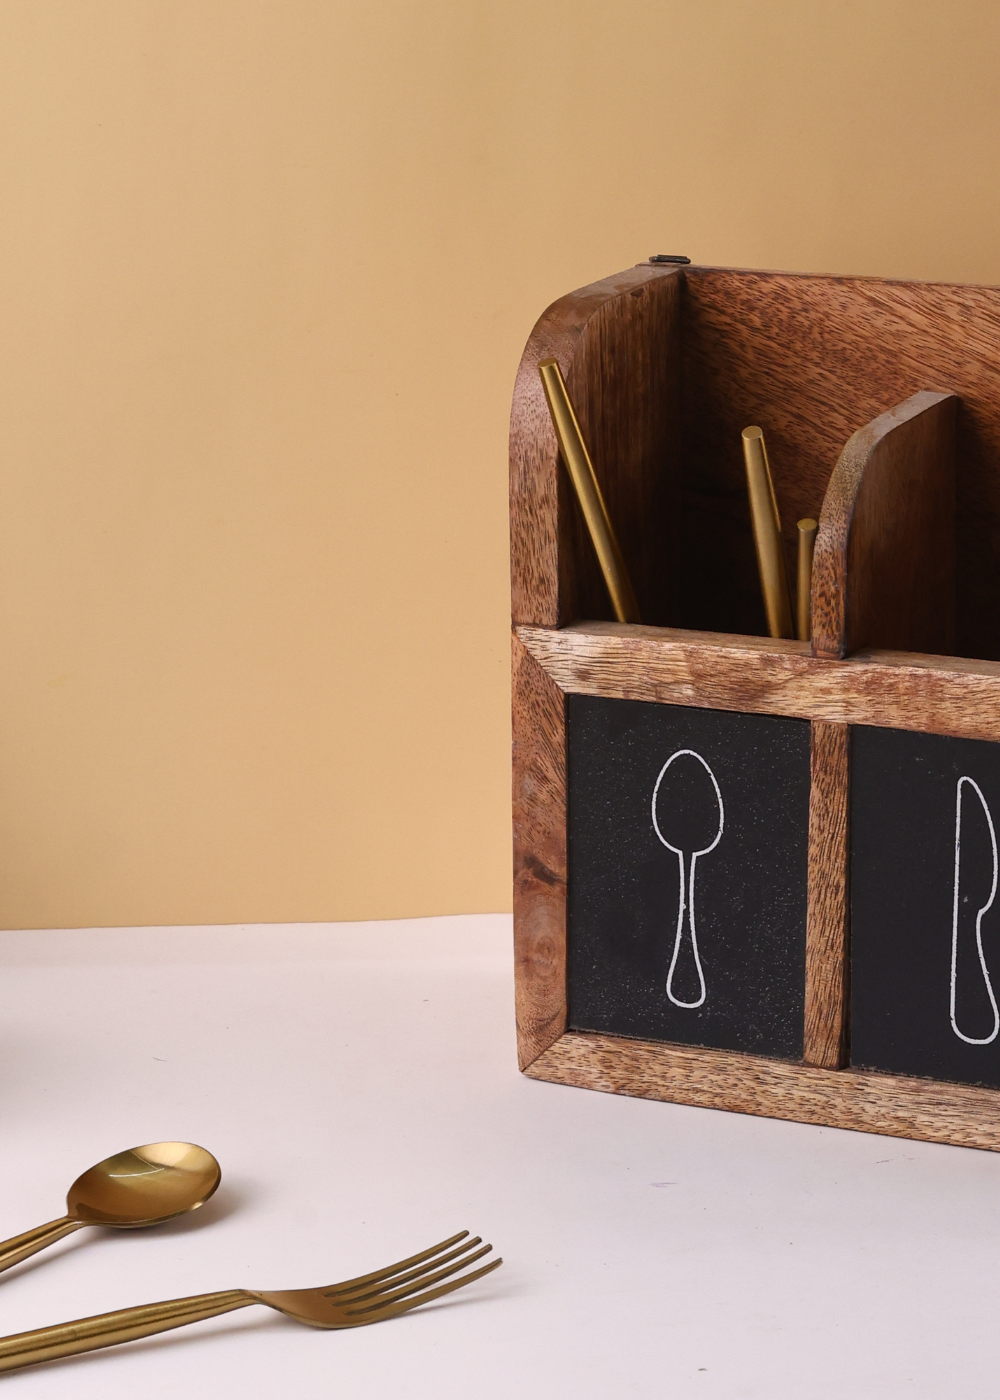 Handmade wooden cutlery holder with cutleries